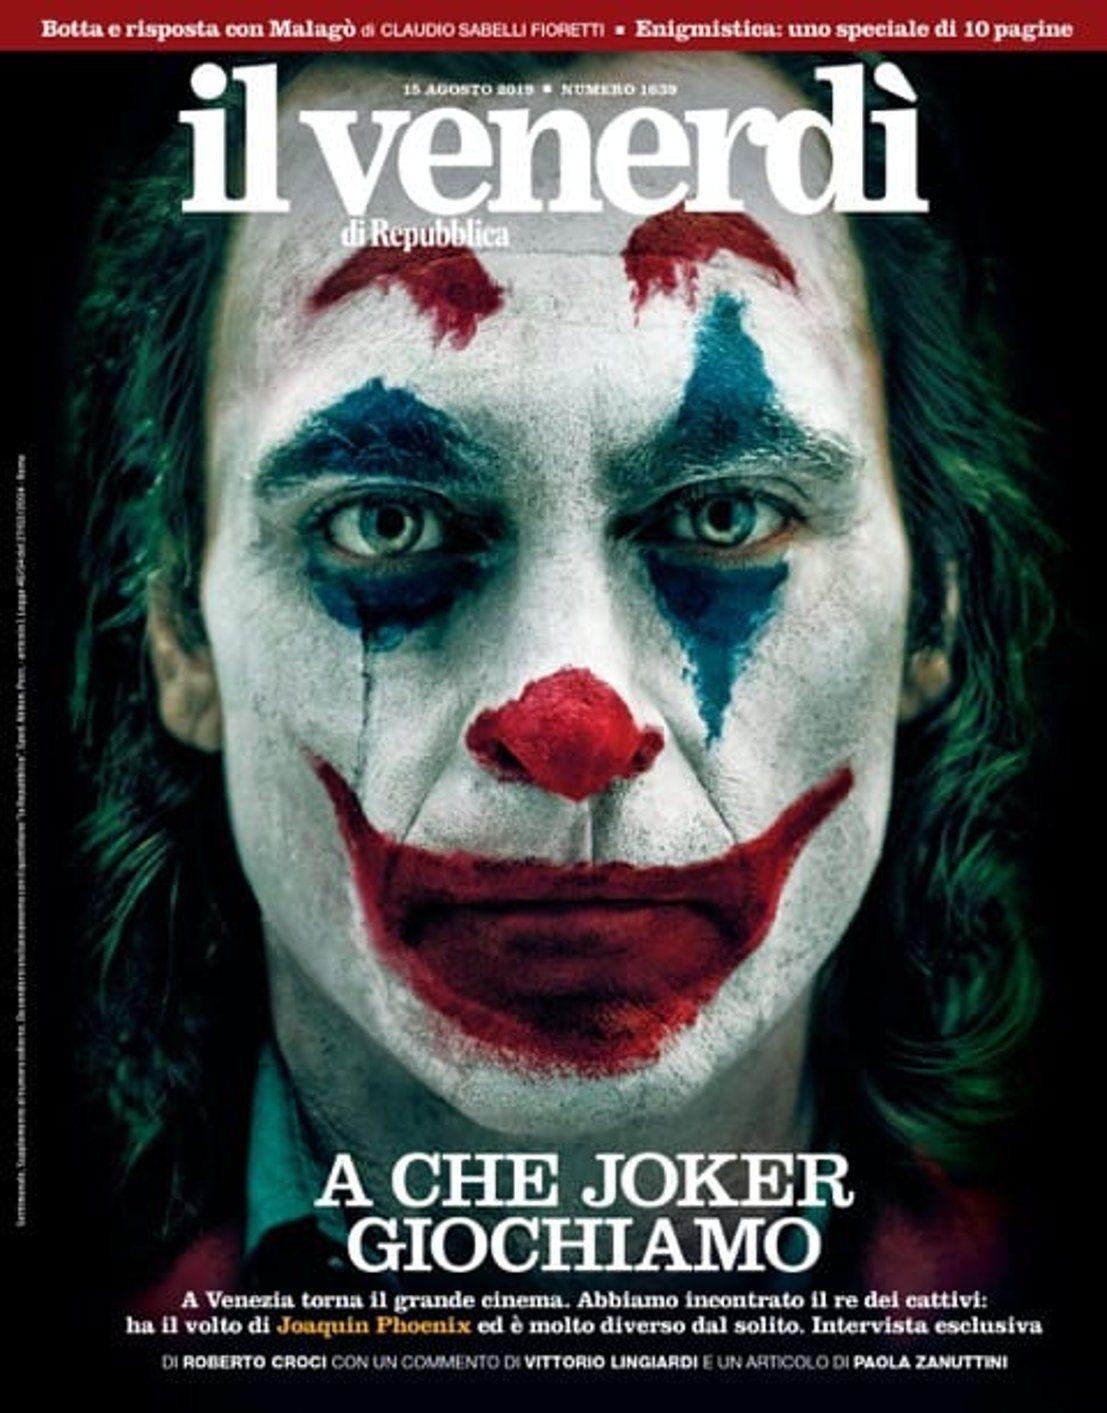 Joaquin Phoenix discusses his Joker laugh in new interview